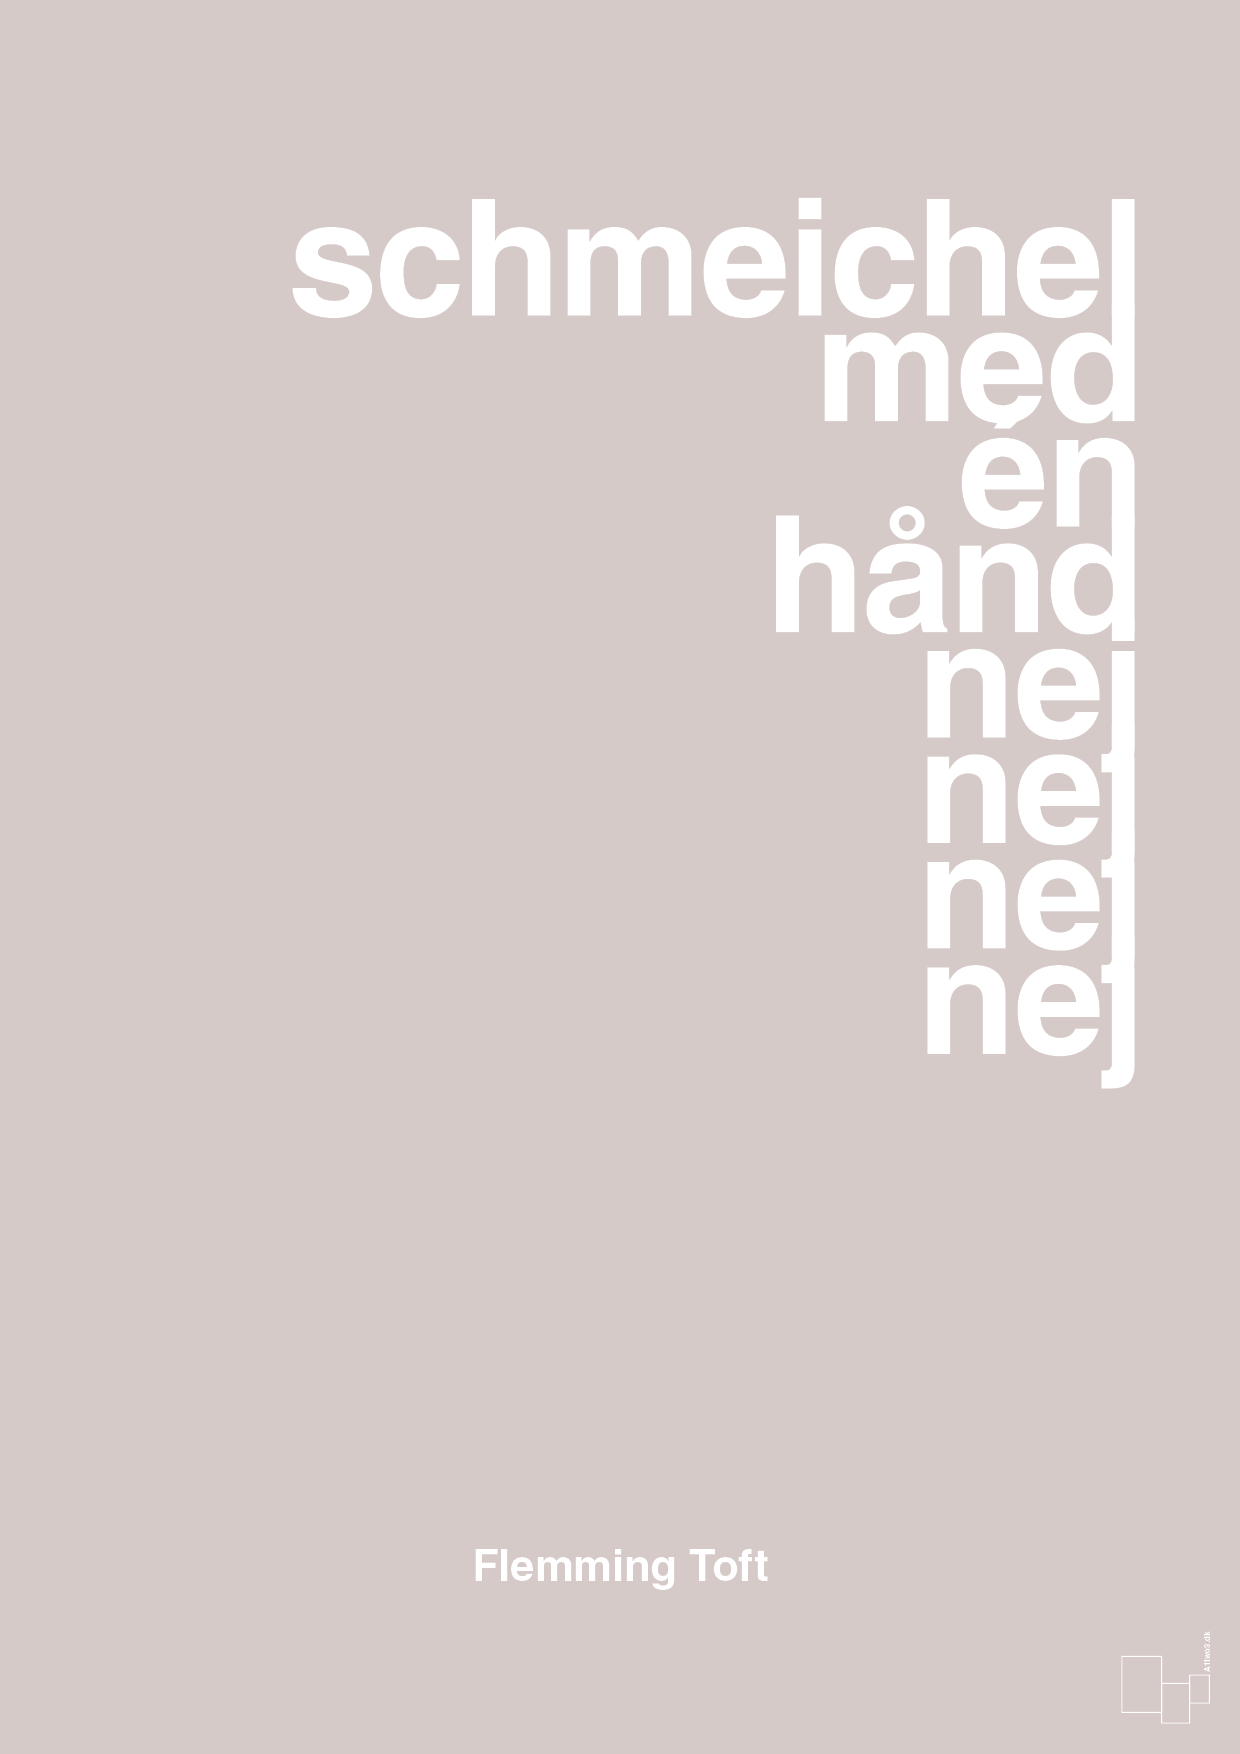 schmeichel med én hånd nej nej nej nej - Plakat med Citater i Broken Beige